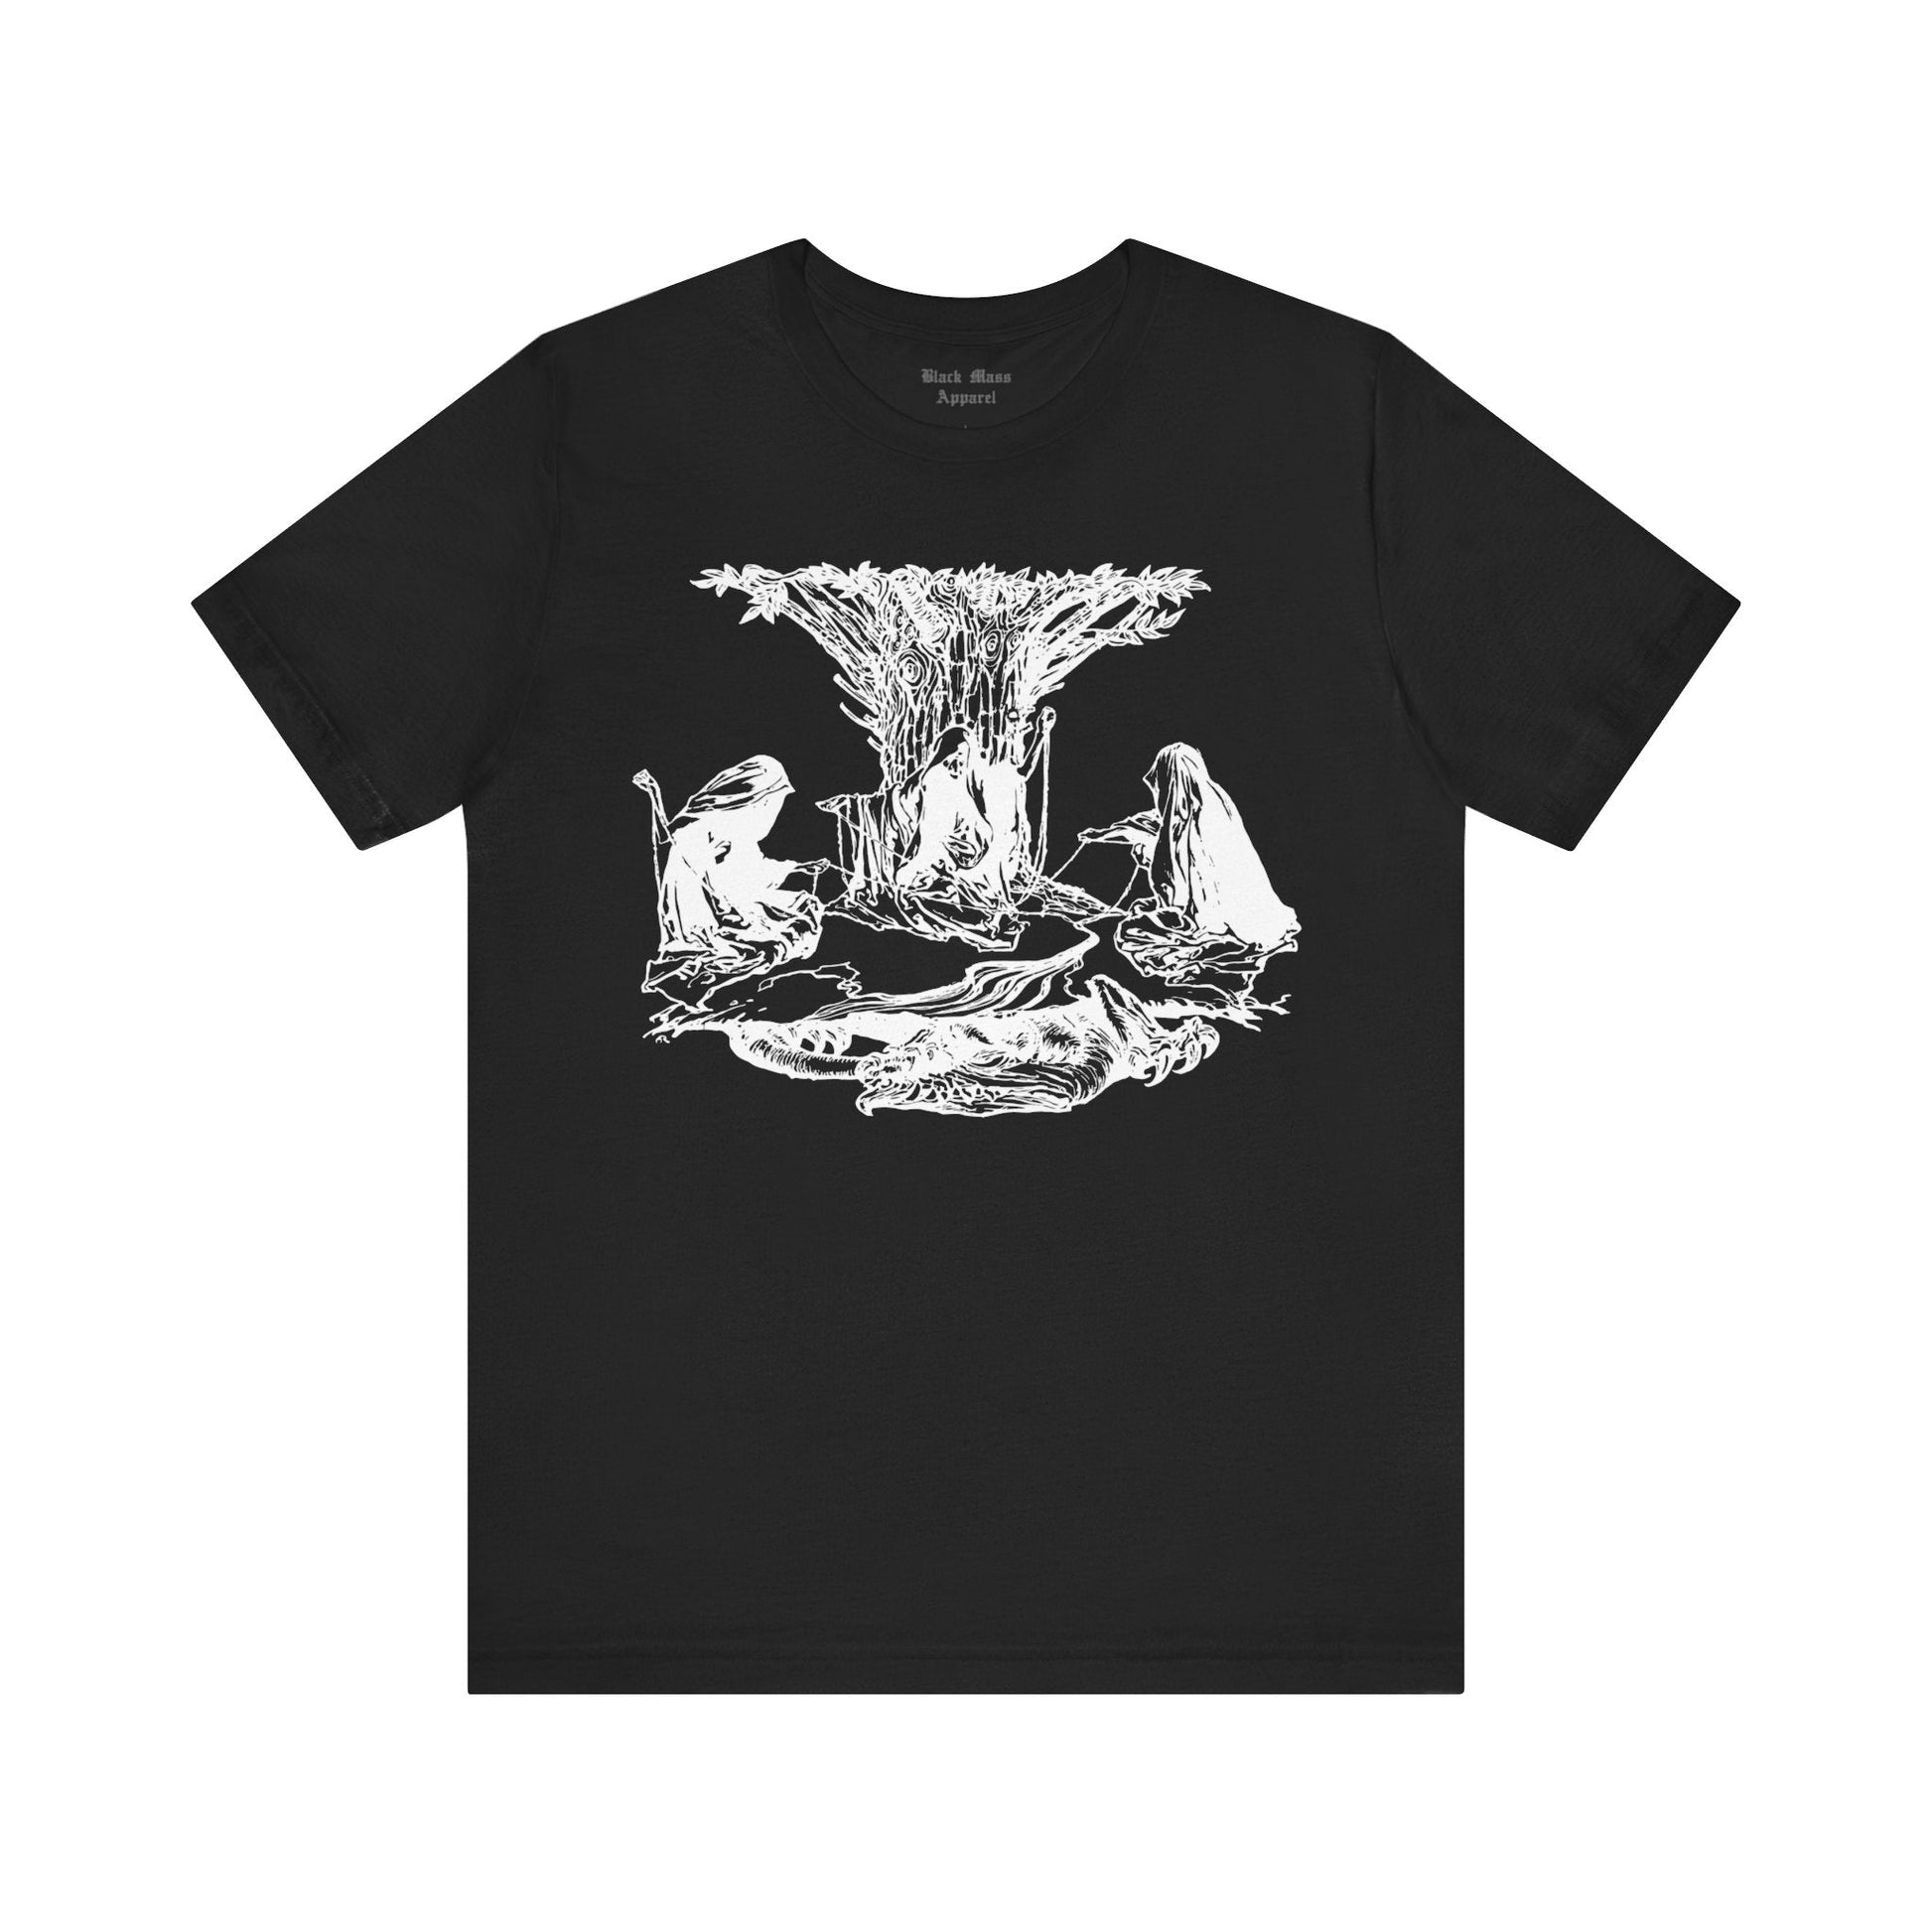 The Norns Weaving Destiny - Black Mass Apparel - T-Shirt